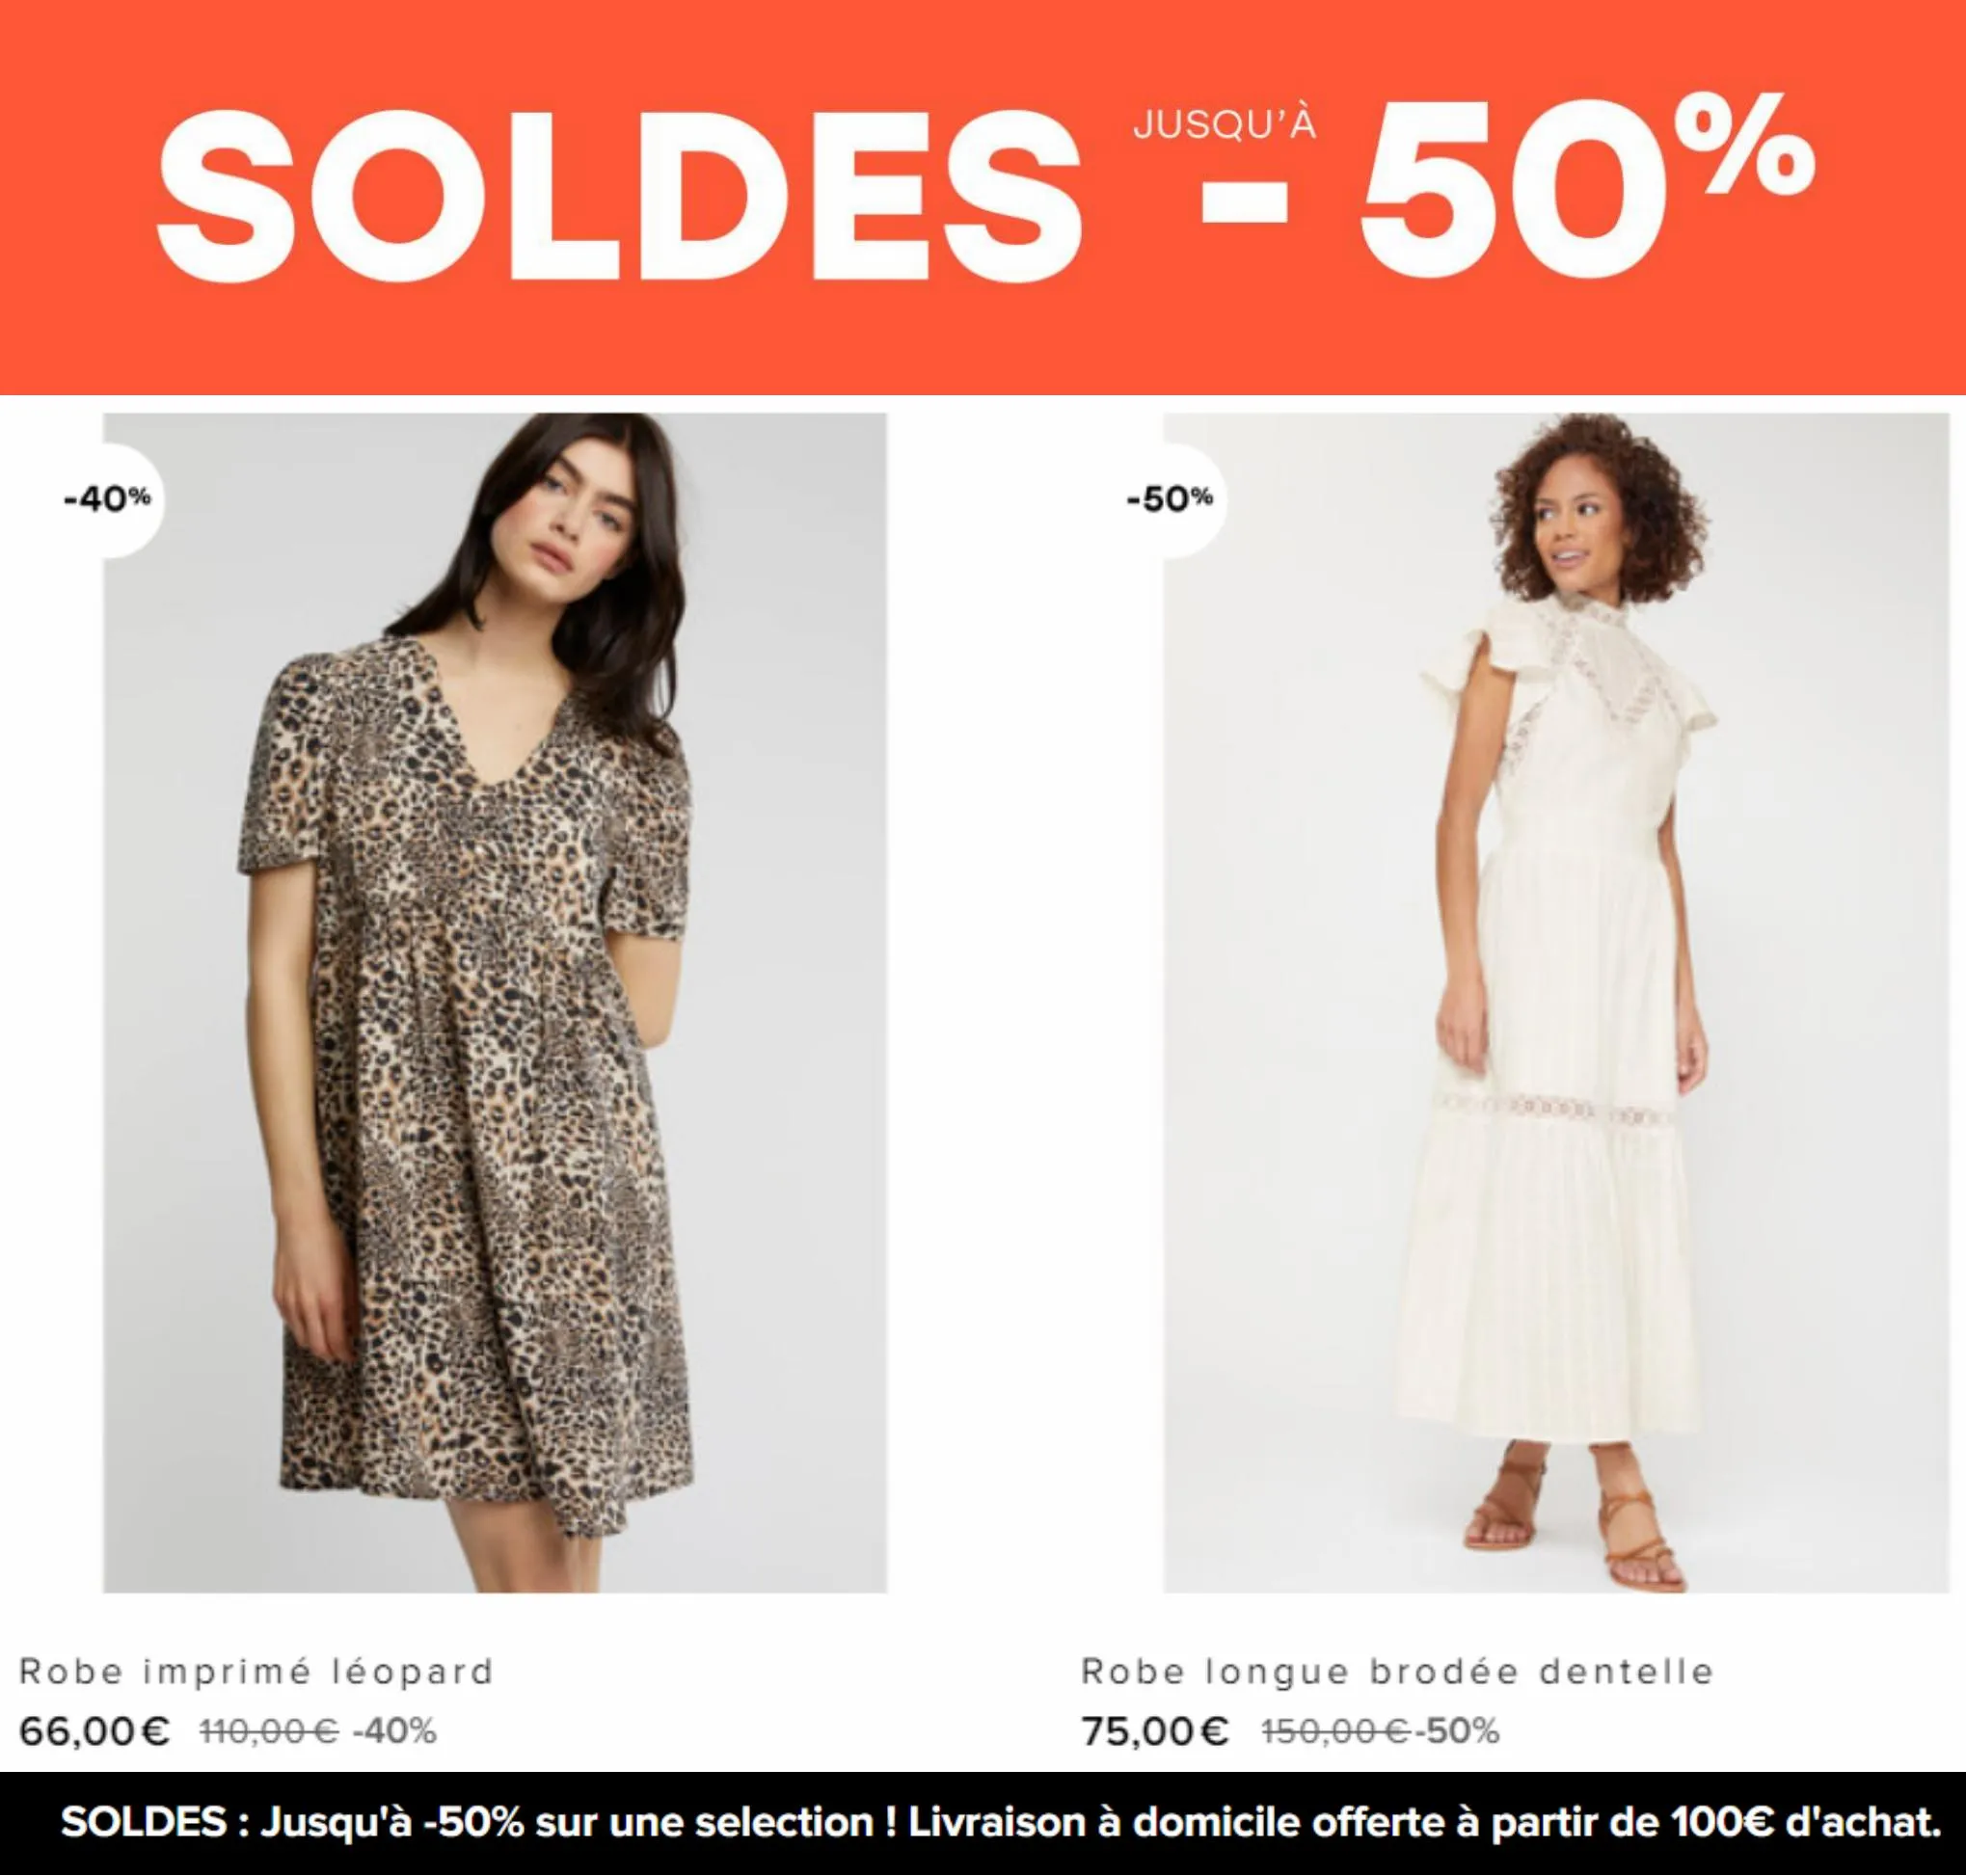 Catalogue Soldes -50% Femme, page 00008